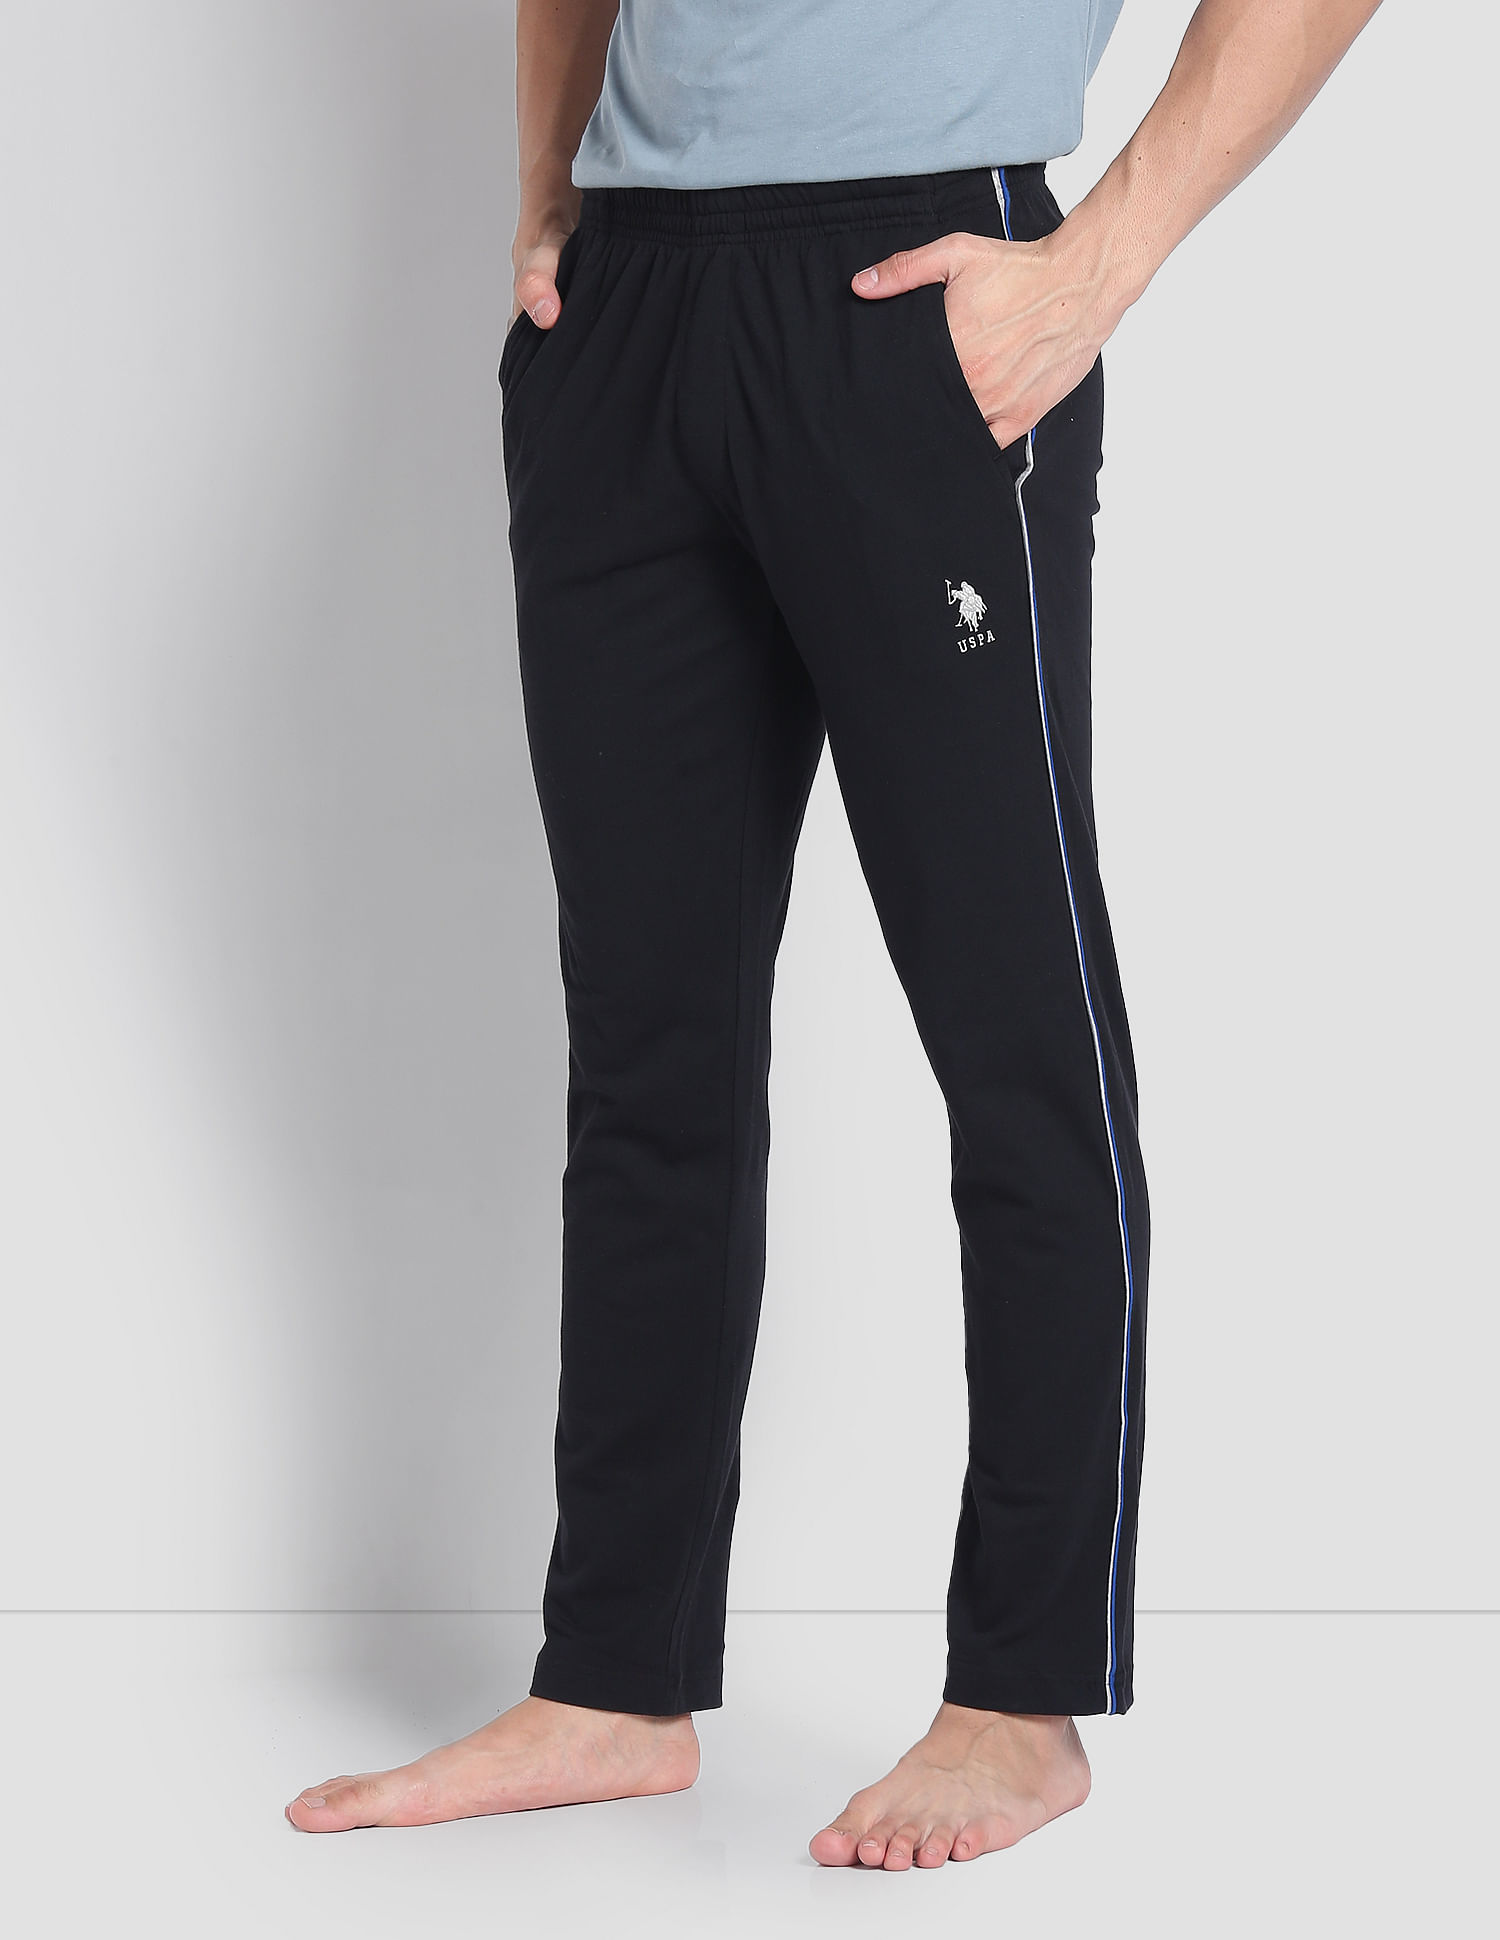 U.S. Polo Assn. Womens Script Logo Super Soft Lounge Pajama Pants Plus Size  Navy 1-X-Large at Amazon Women's Clothing store